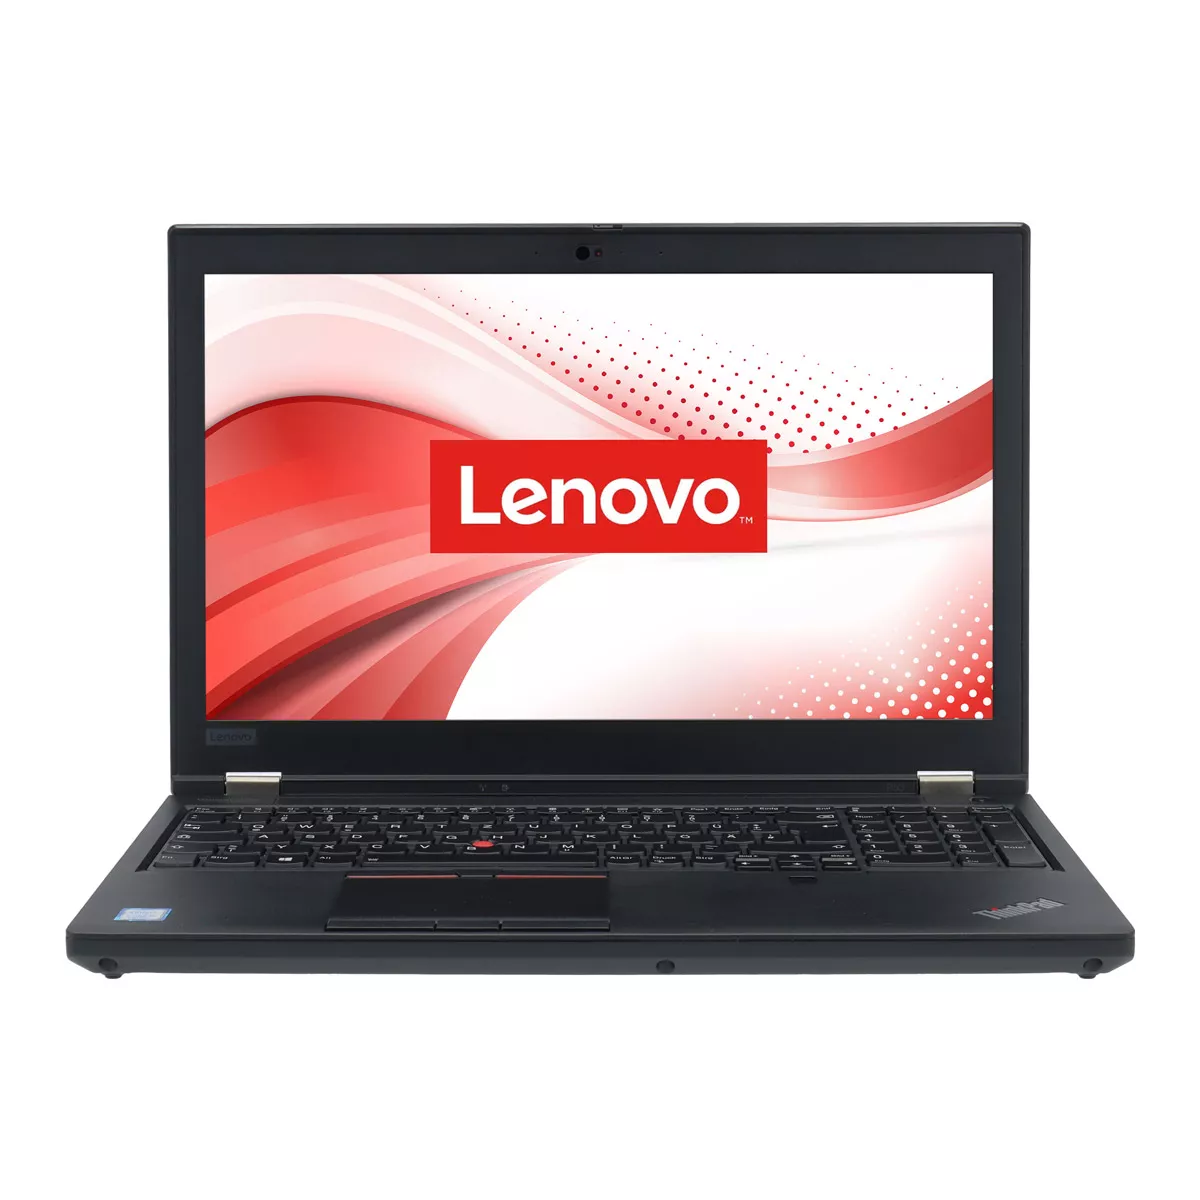 Lenovo ThinkPad P53 Core i9 9880H nVidia Quadro RTX 4000 32 GB 500 GB M.2 nVME SSD Webcam A+